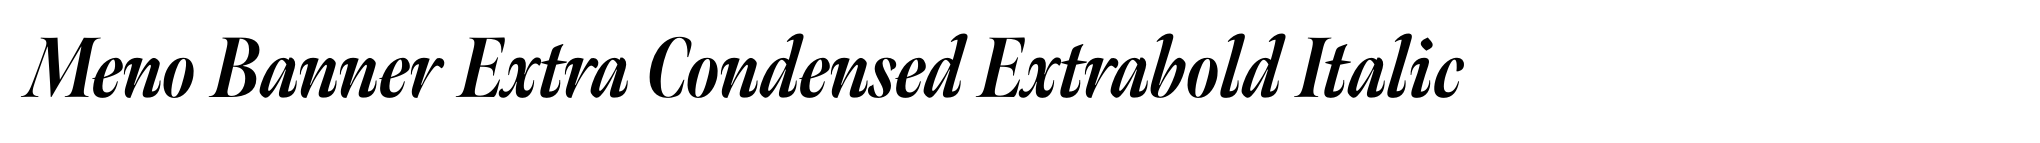 Meno Banner Extra Condensed Extrabold Italic image